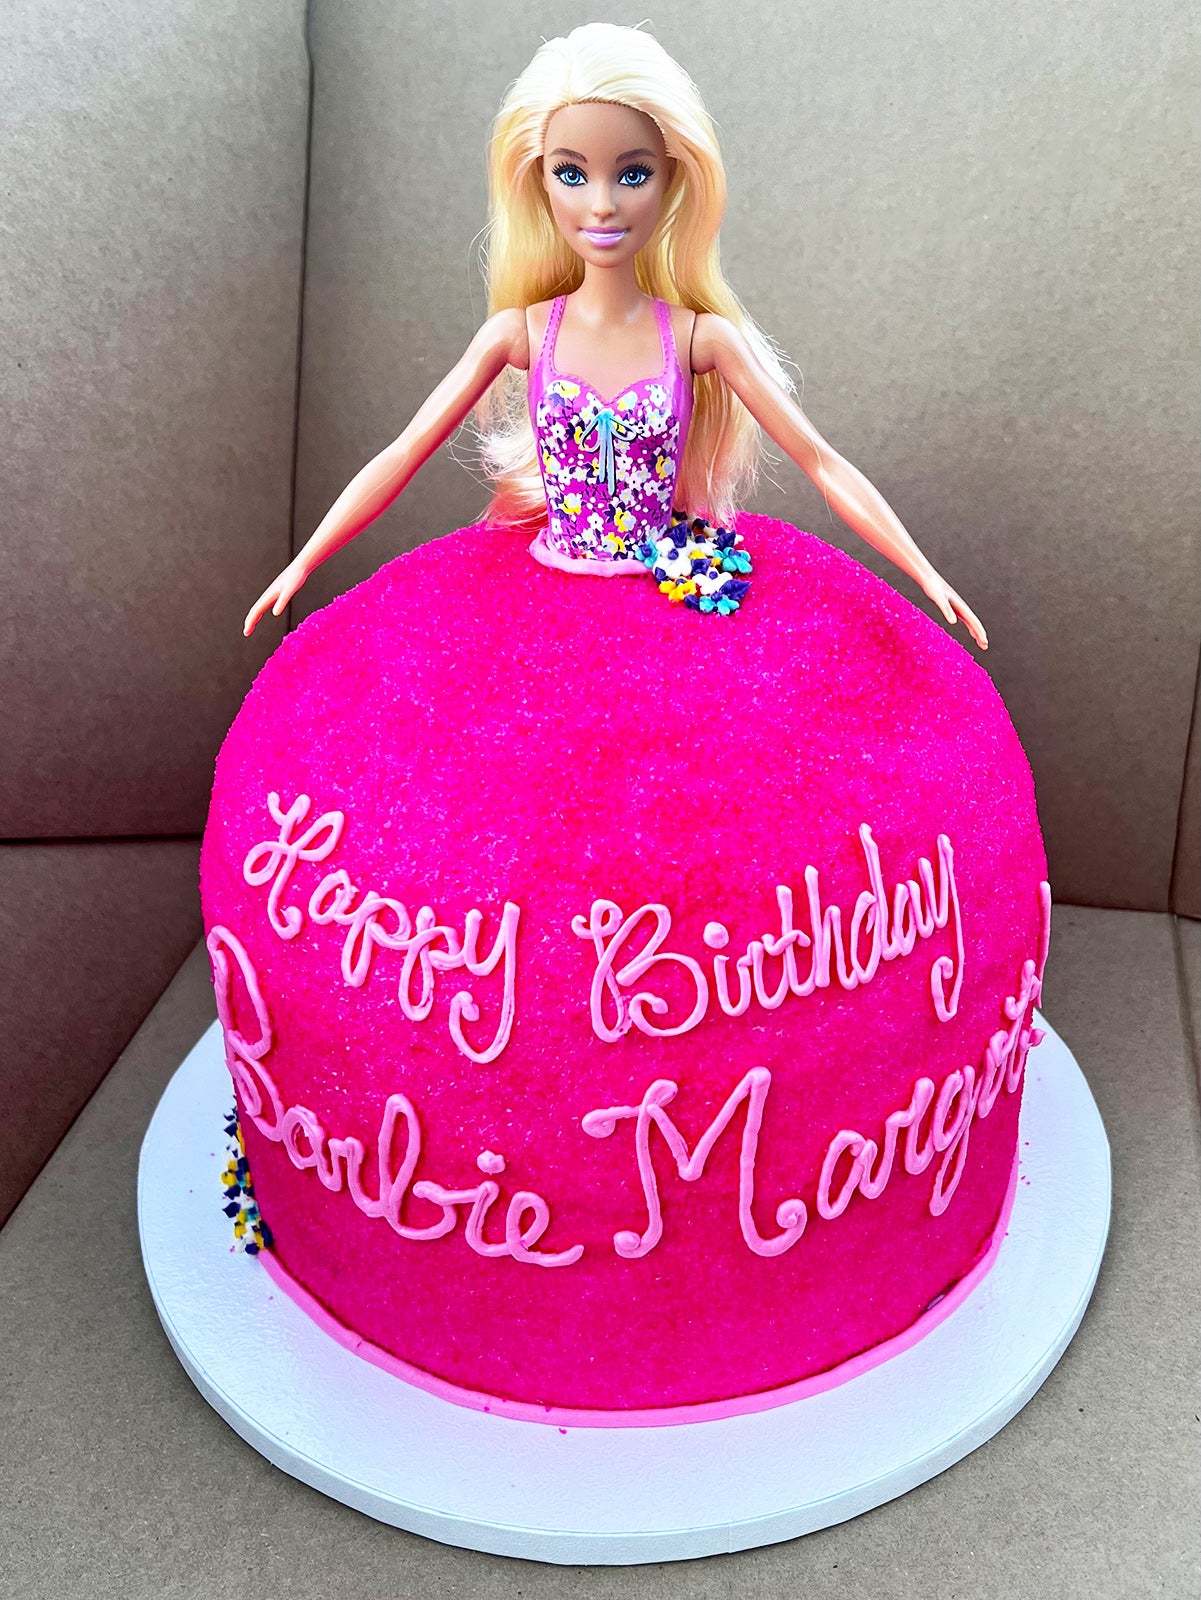 Barbie Dream Cake